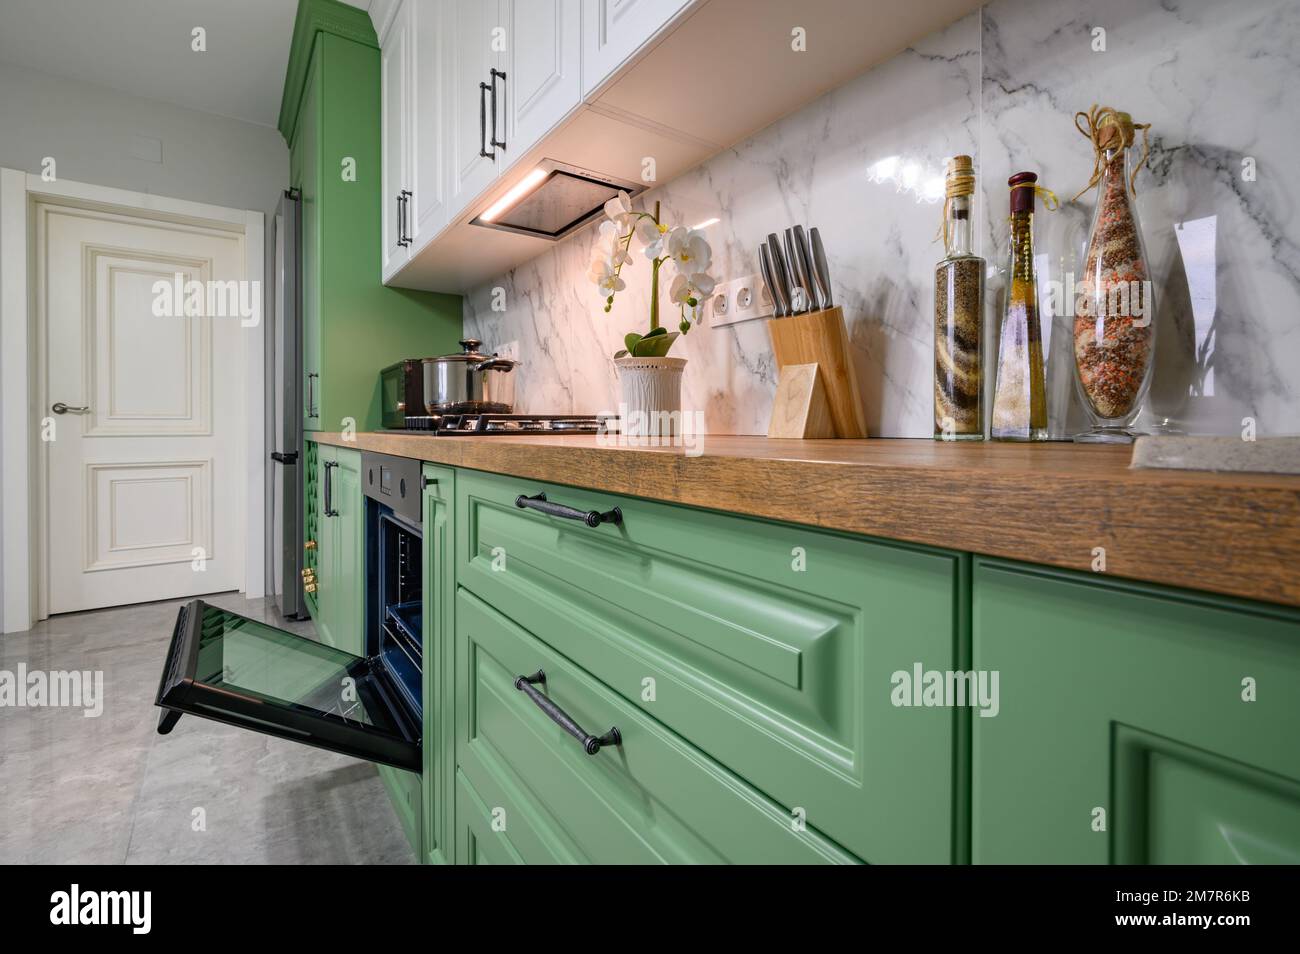 https://c8.alamy.com/comp/2M7R6KB/green-and-white-colored-modern-kitchen-details-closeup-2M7R6KB.jpg